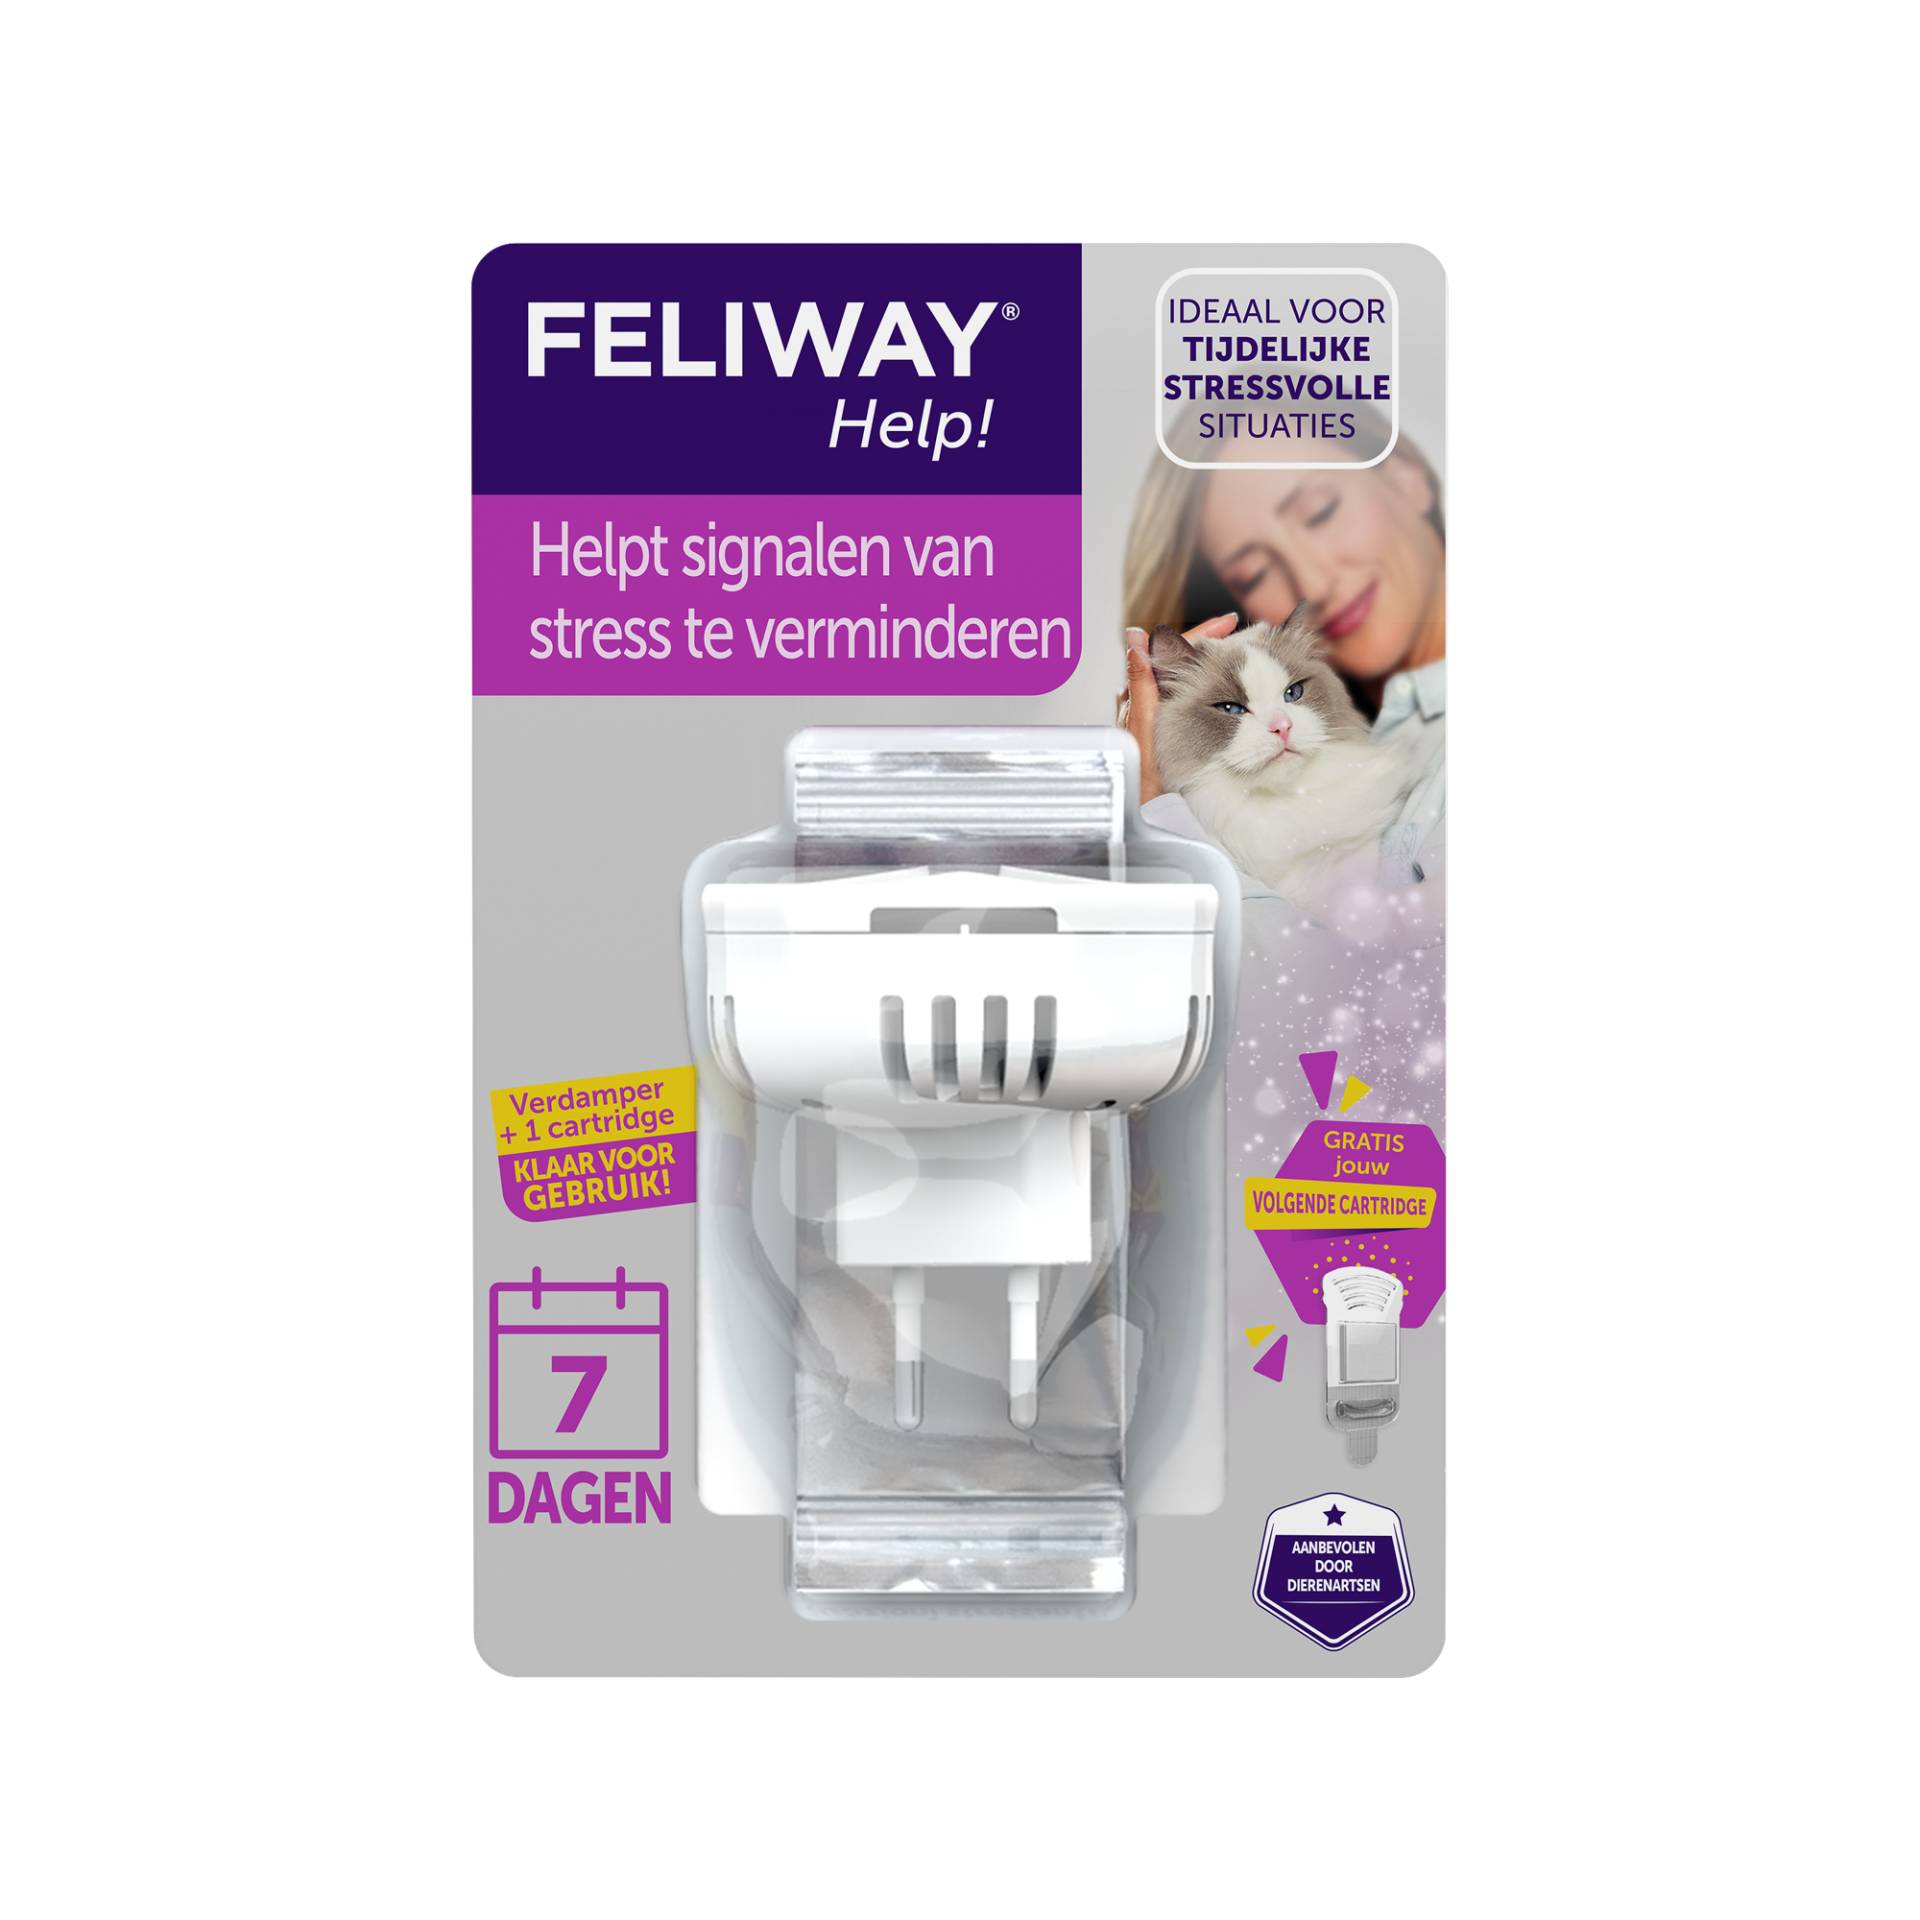 Feliway Help! - Nachfüllung - 3 Cartridges (3x 7 Tage) von FELIWAY